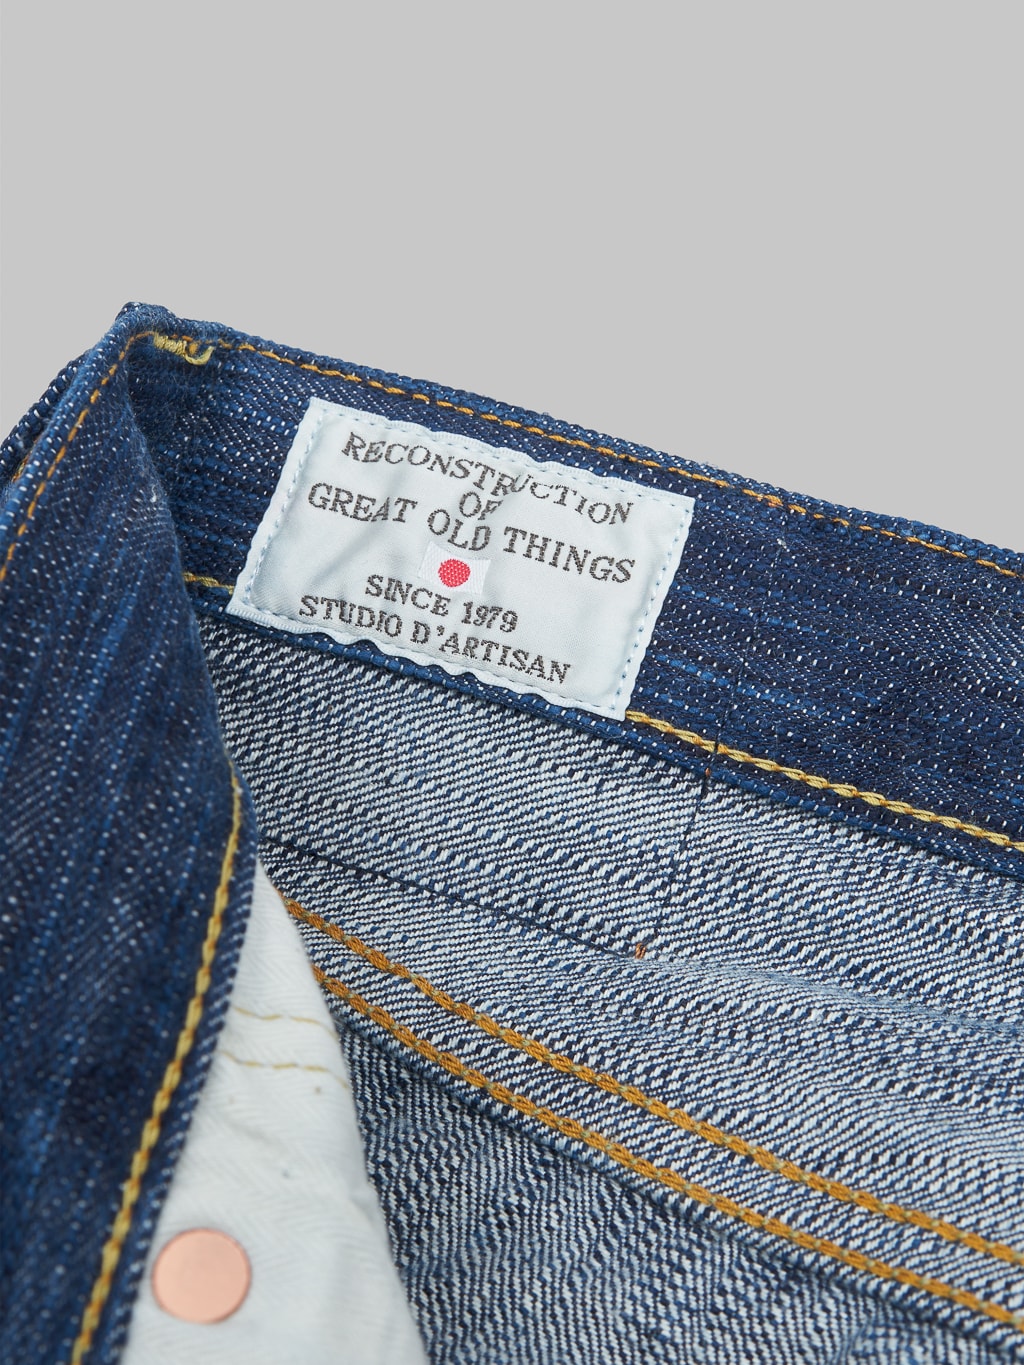 Studio dartisan tokushima awa shoai regular straight jeans brand tag